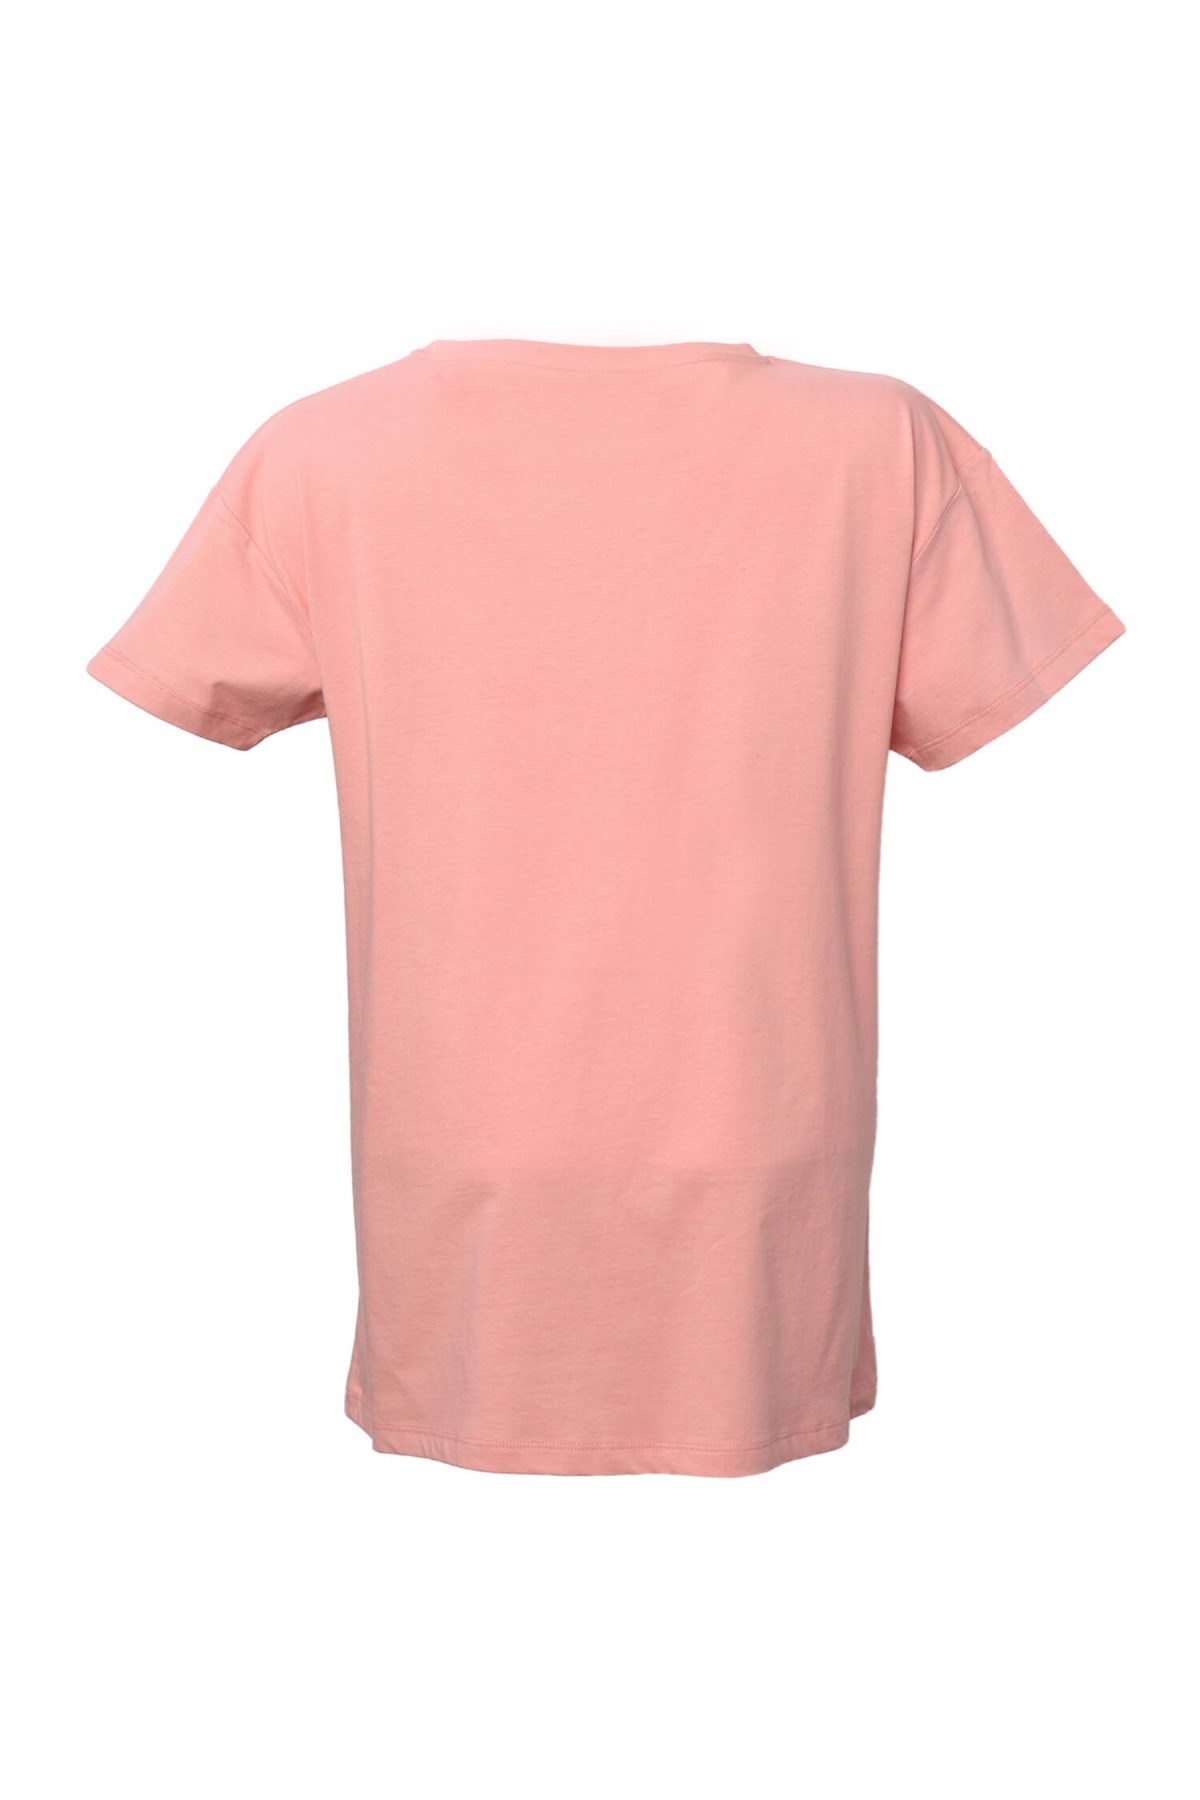 Hummel Kadın T-Shirt 911477-2098 Pınk Amethyst